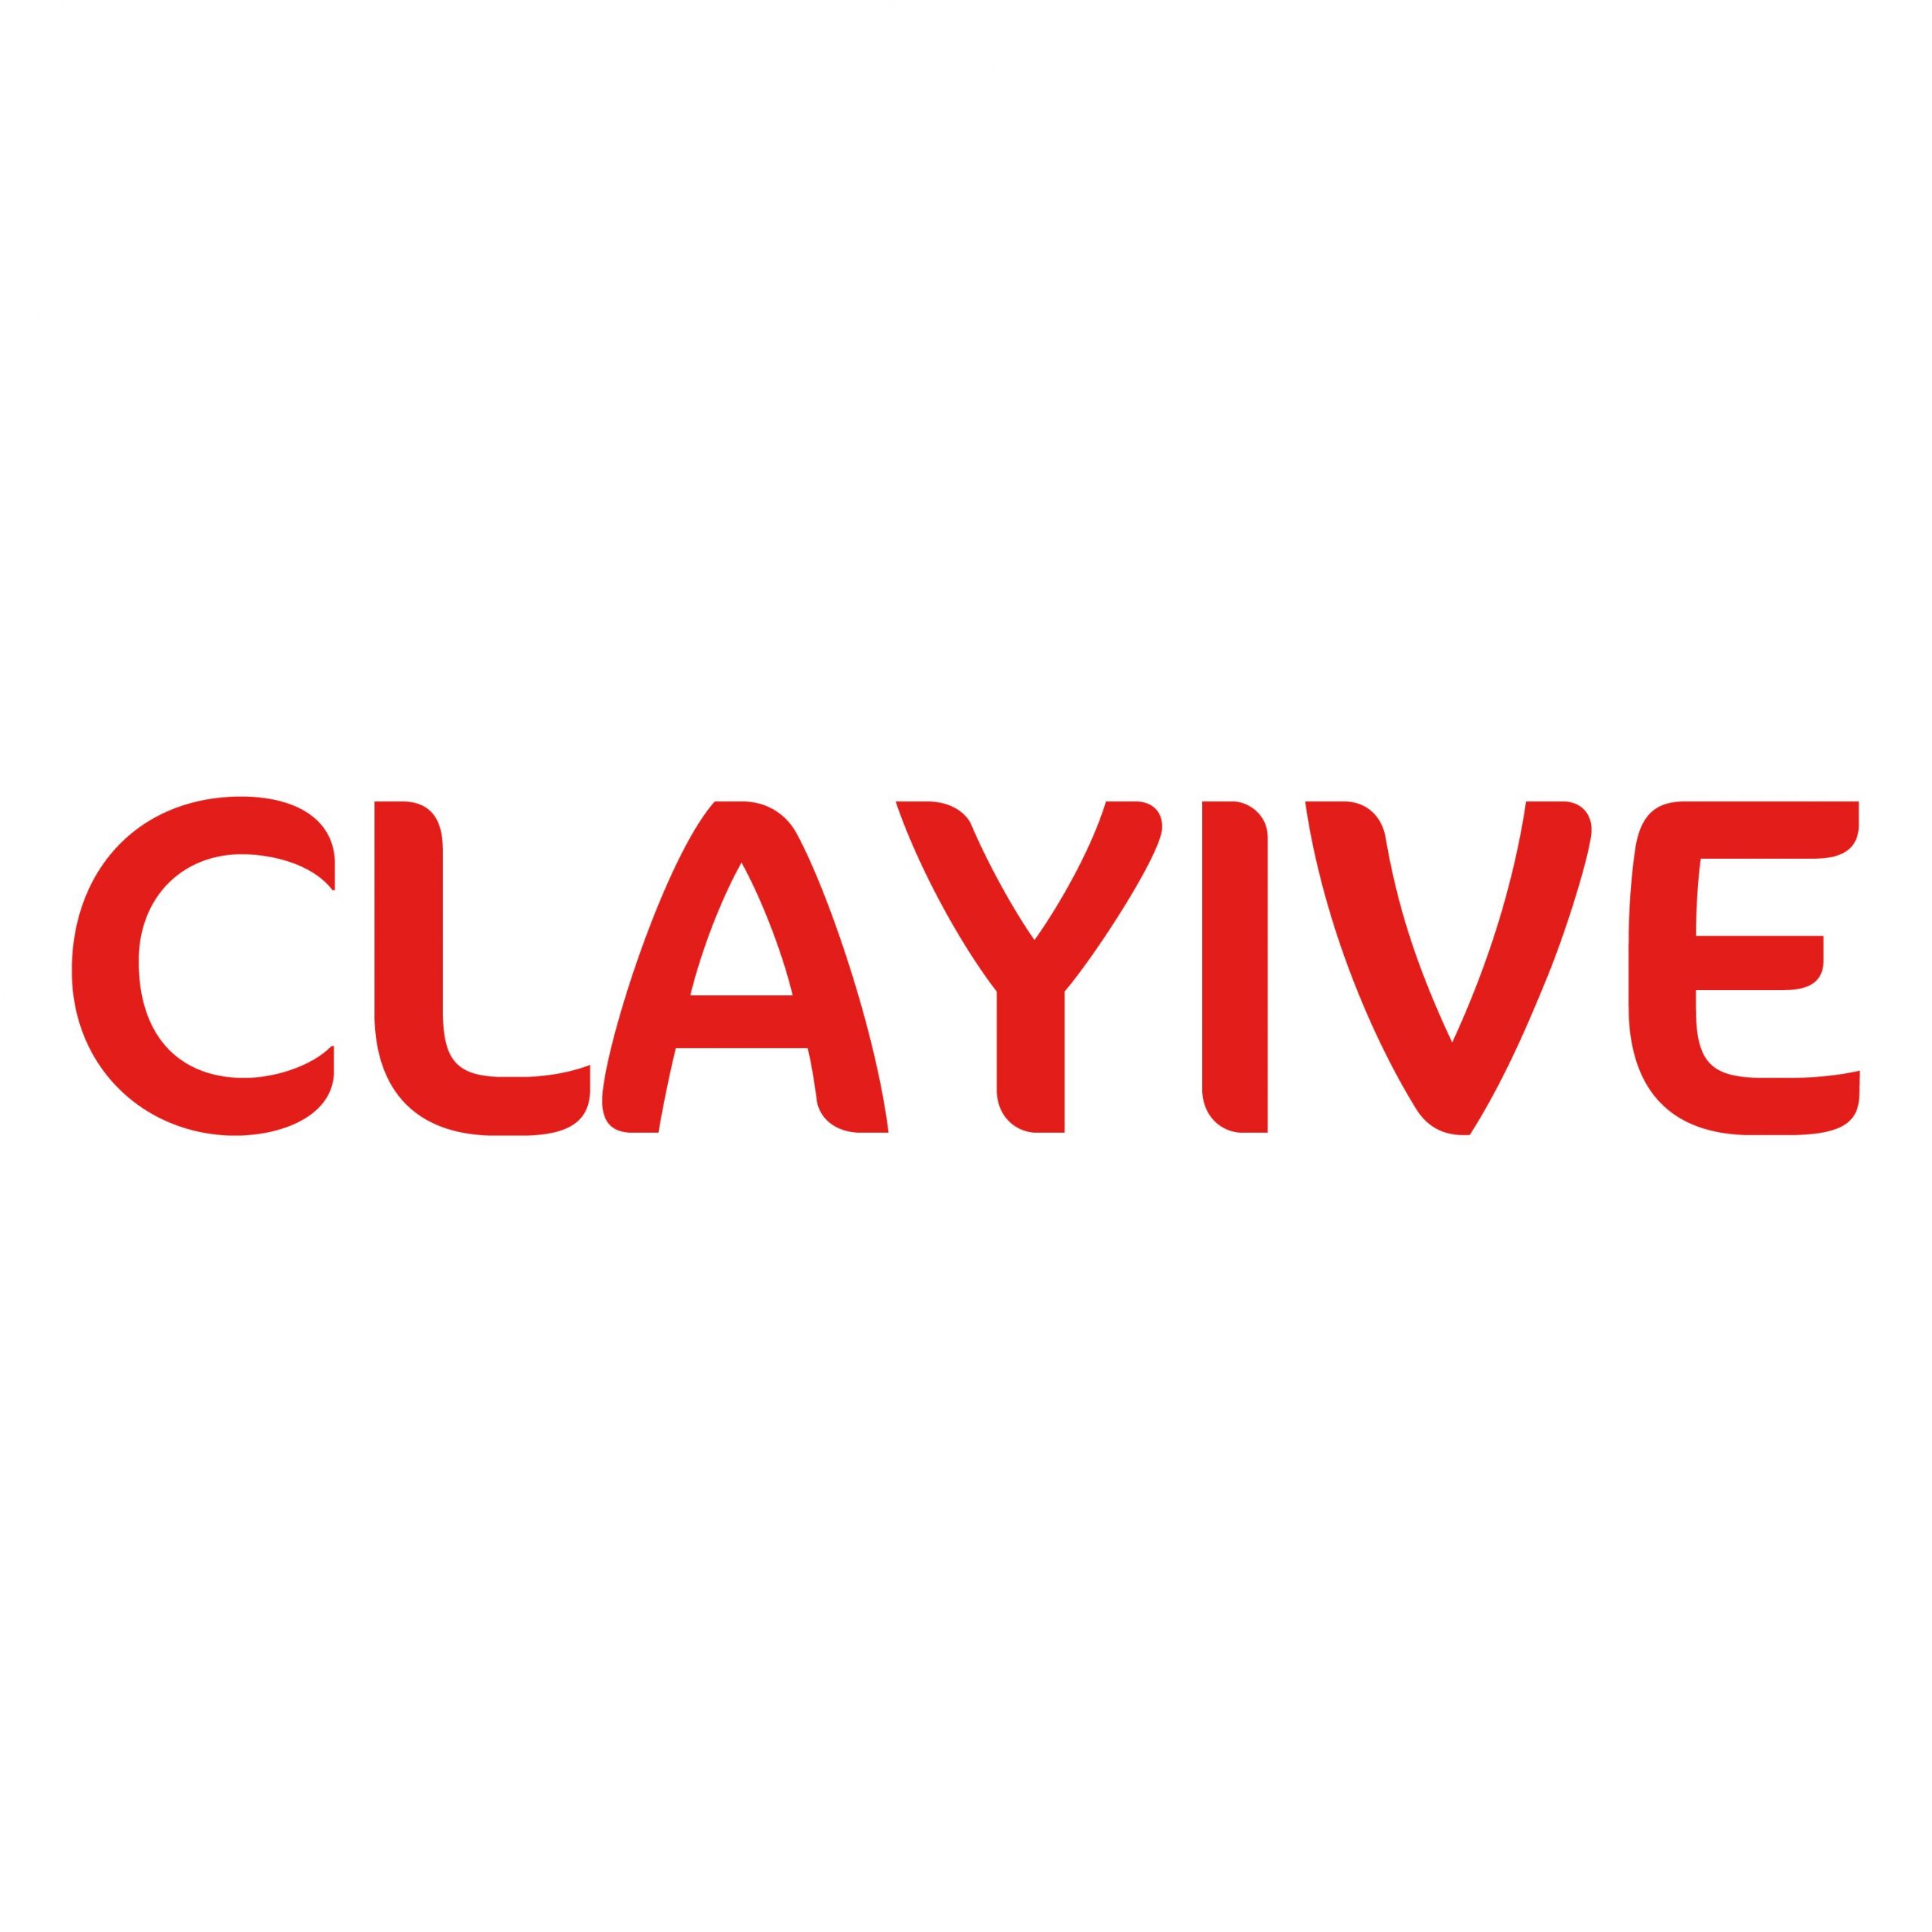 Clayive-Digital-Marketing-Agency-4